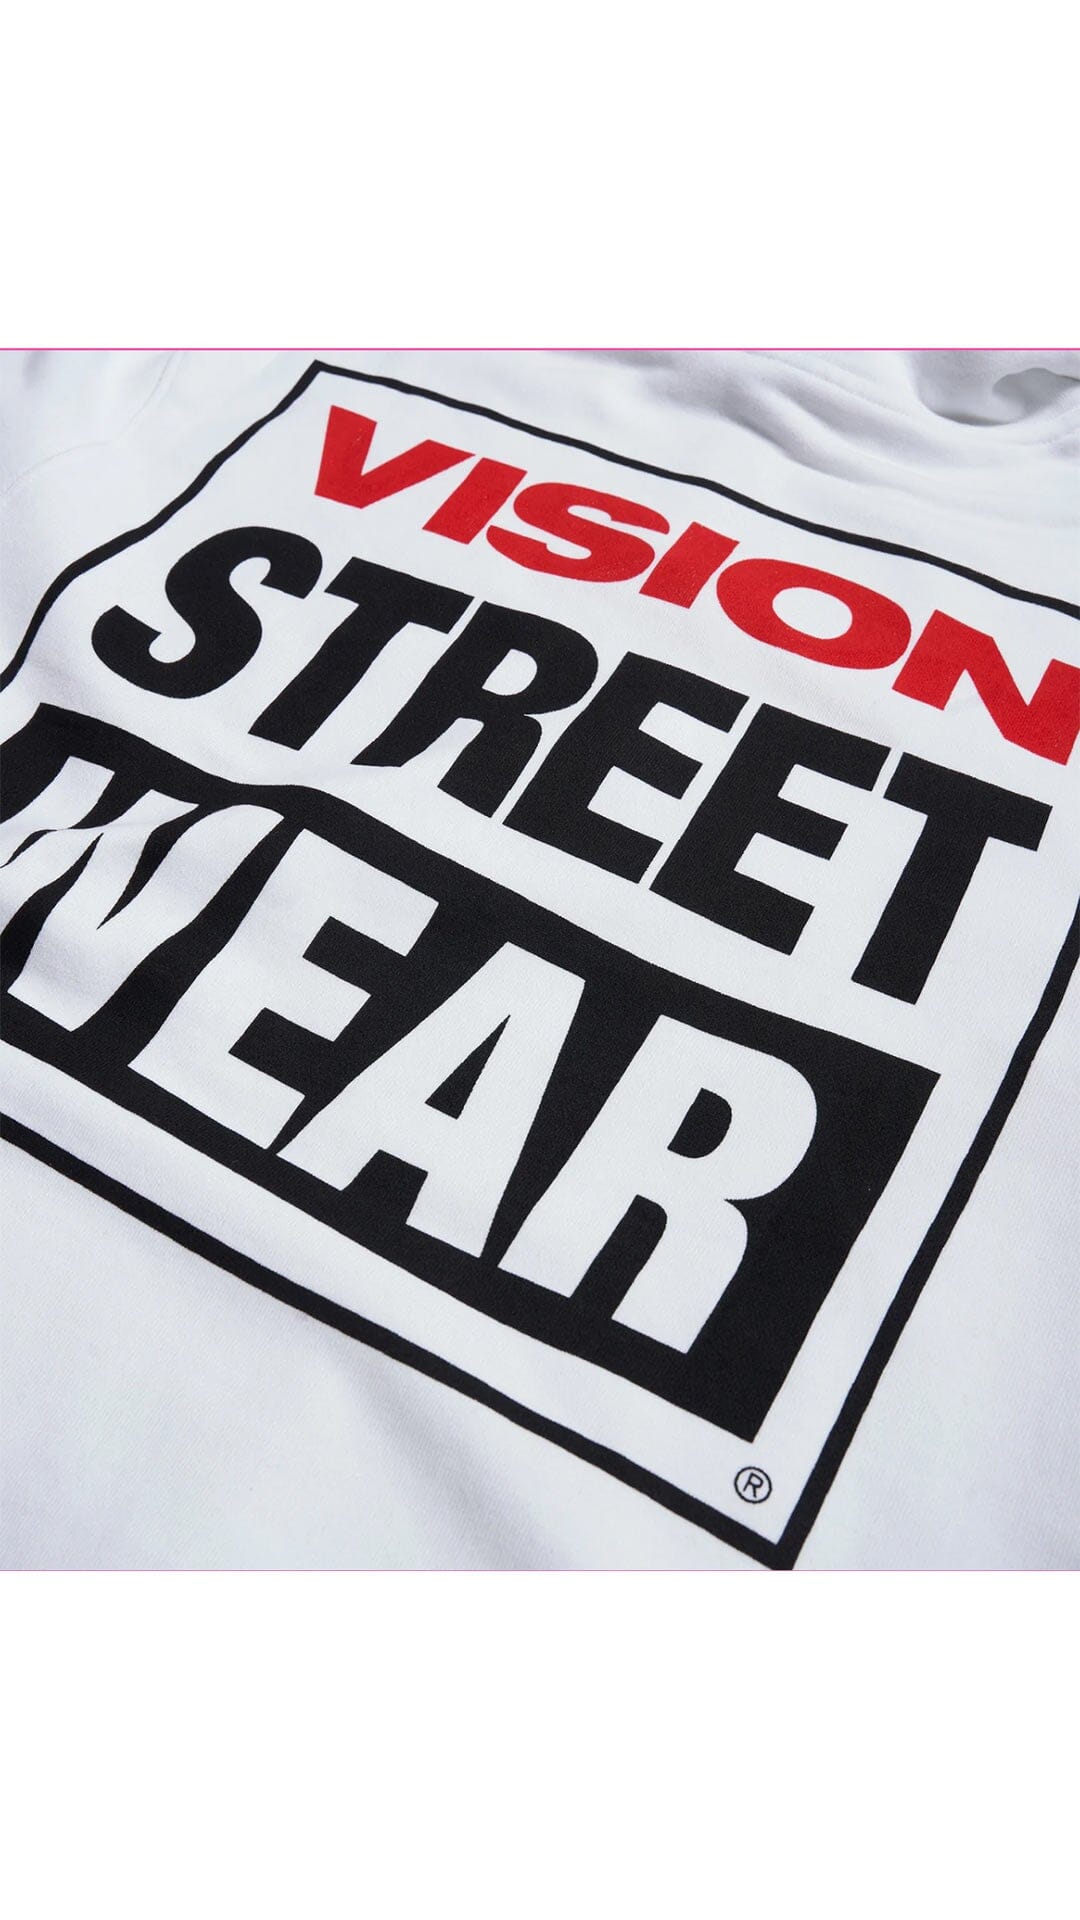 Vision Street Wear OG Box Logo Hoodie White - Sudadera Ropa Vision Skateboards 